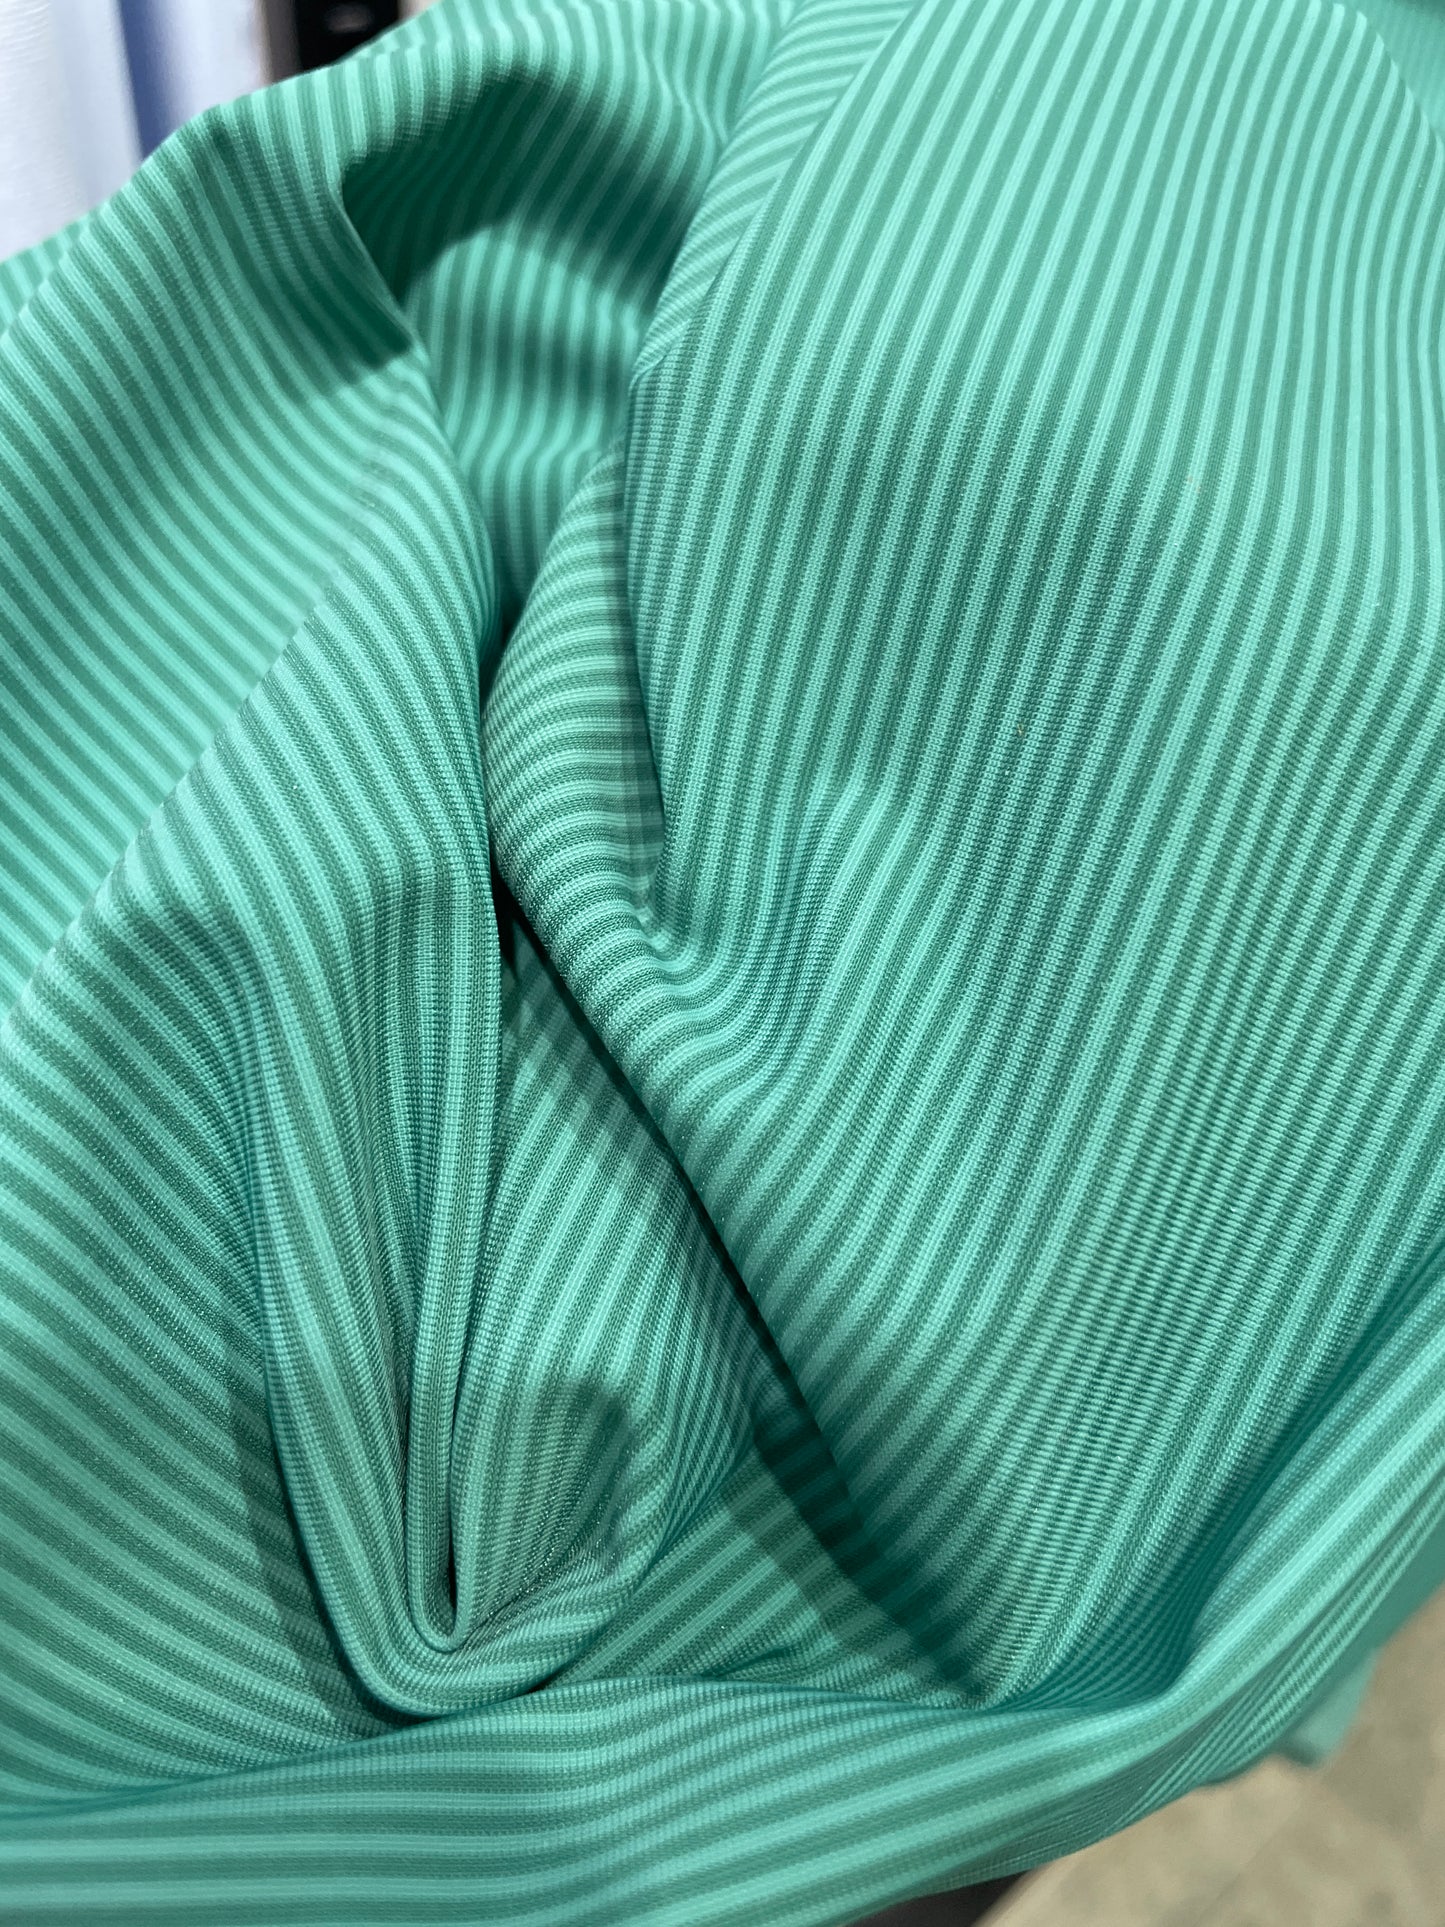 New & Hot Stripe Texture Quick Dry Fabric For Activewear - Natasha Fabric